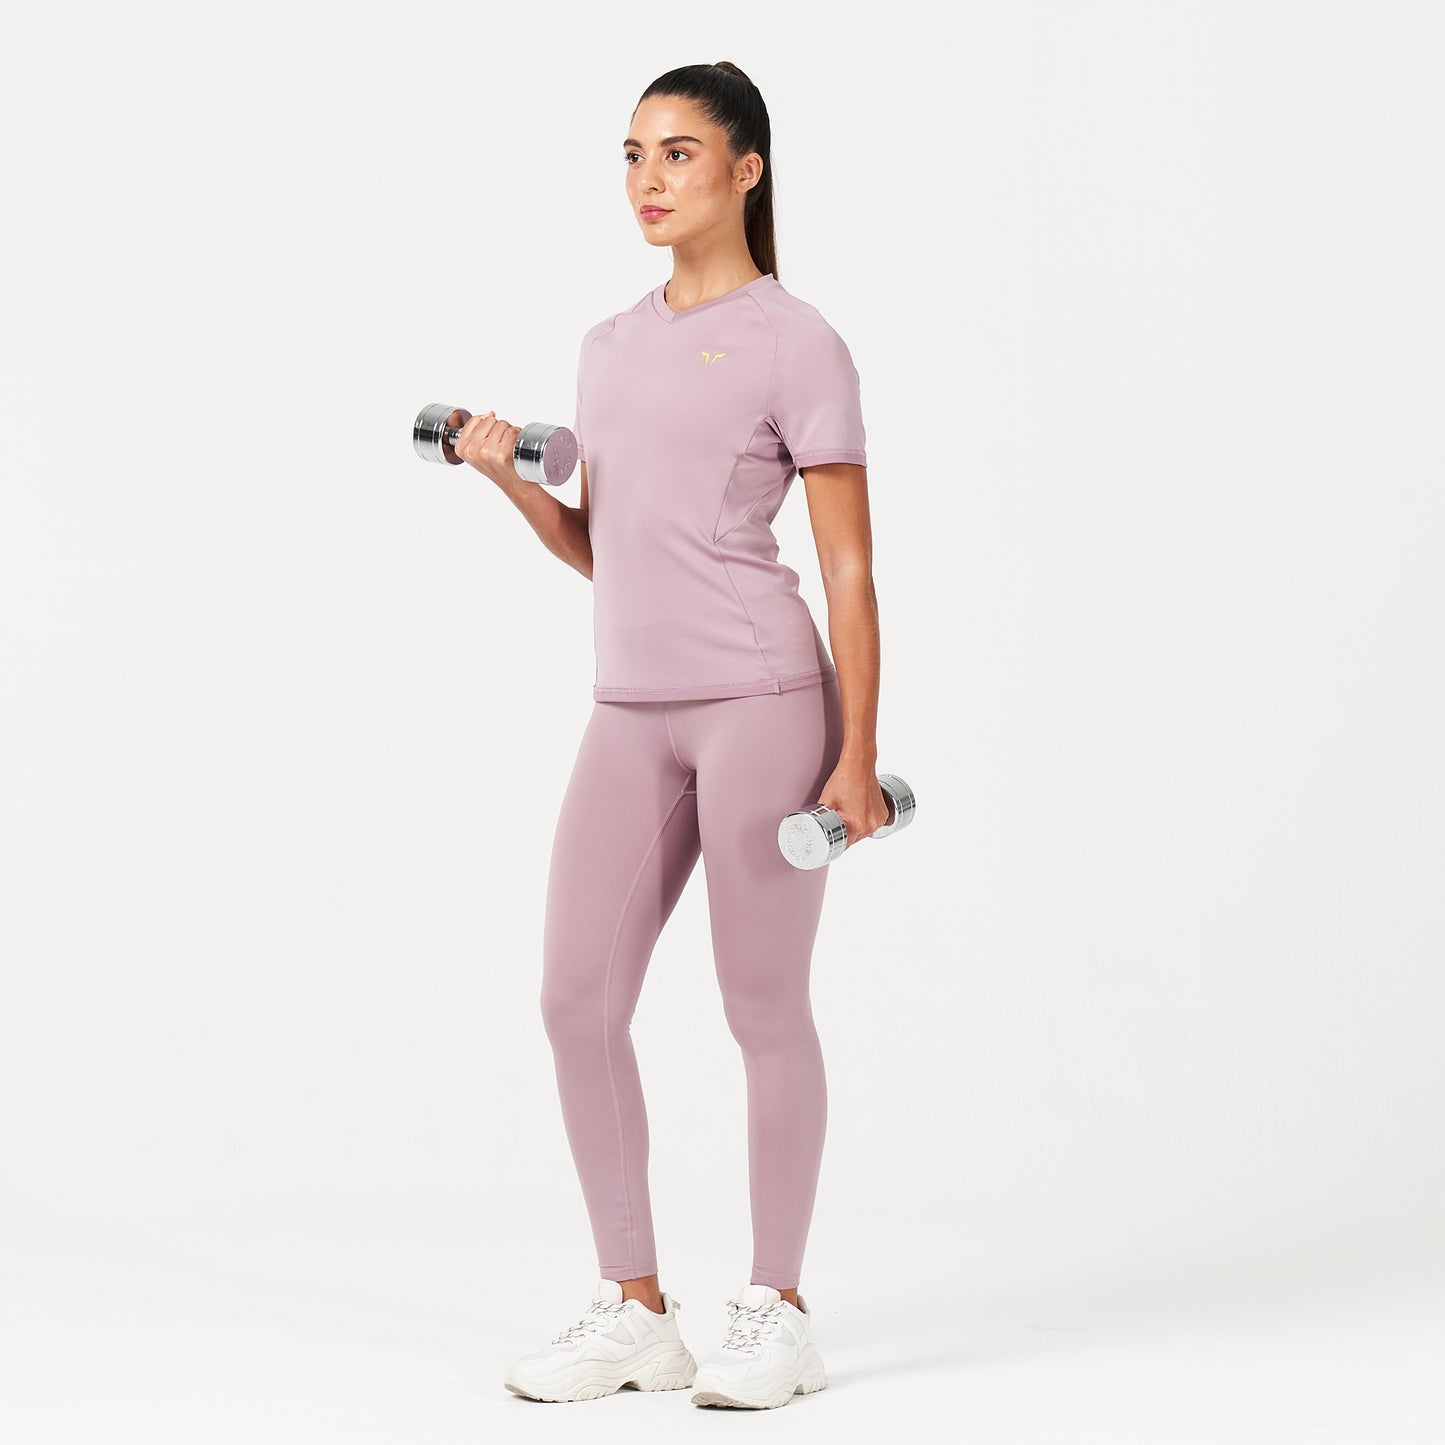 squatwolf-workout-clothes-lab360-tdry-contour-tee-elderberry-gym-t-shirts-for-women